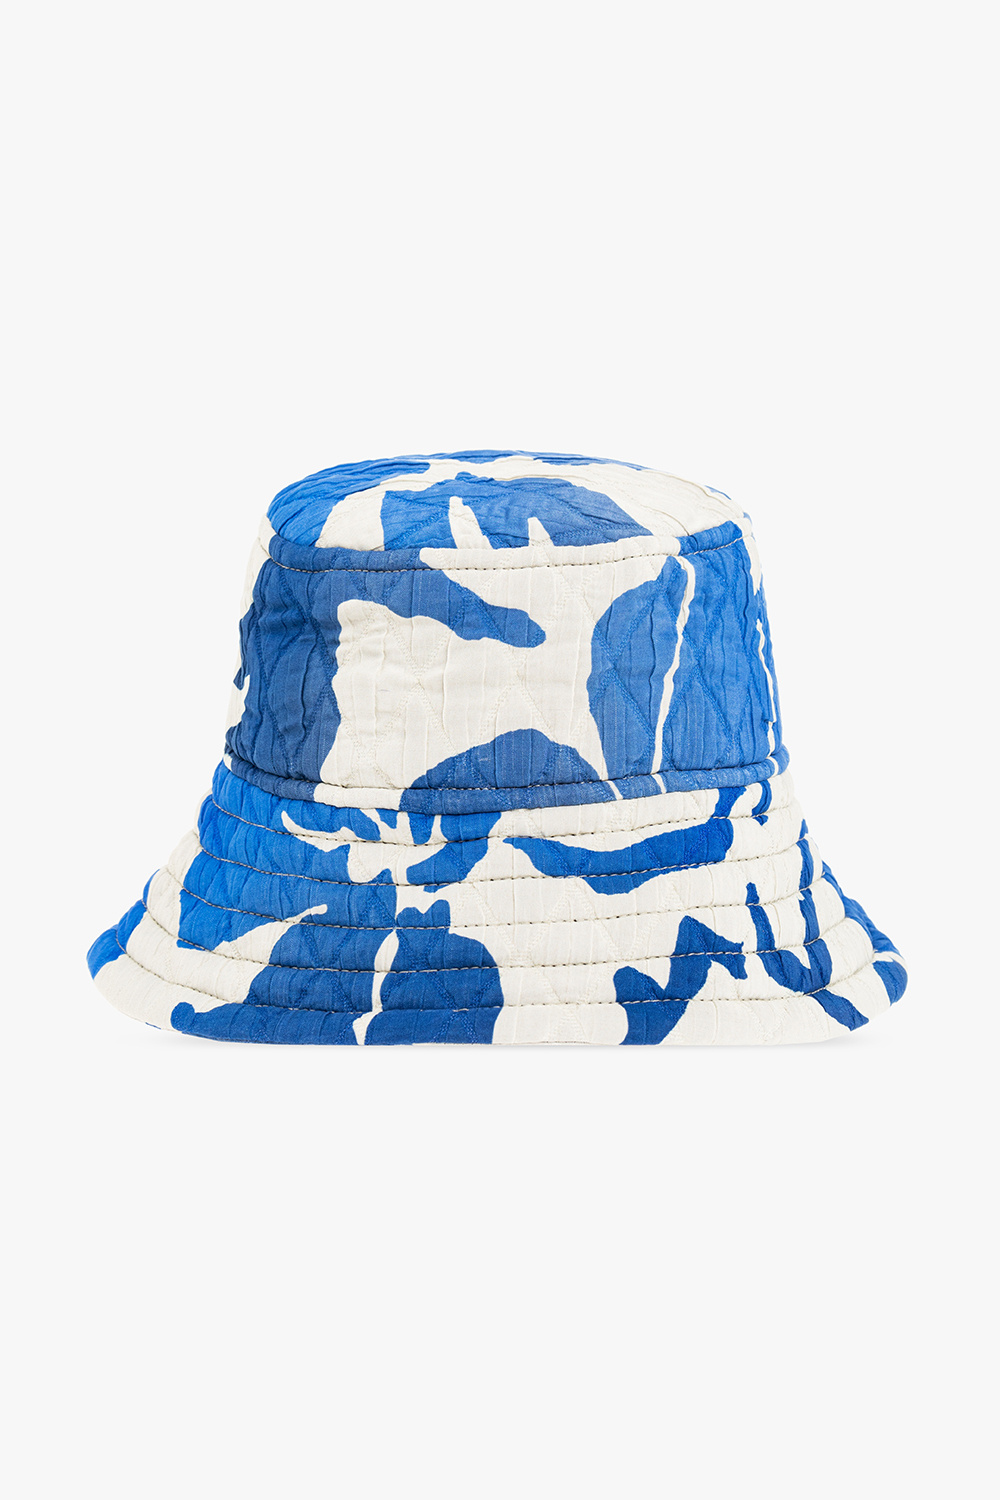 Dries Van Noten Cool Running Hats to Beat Any Weather